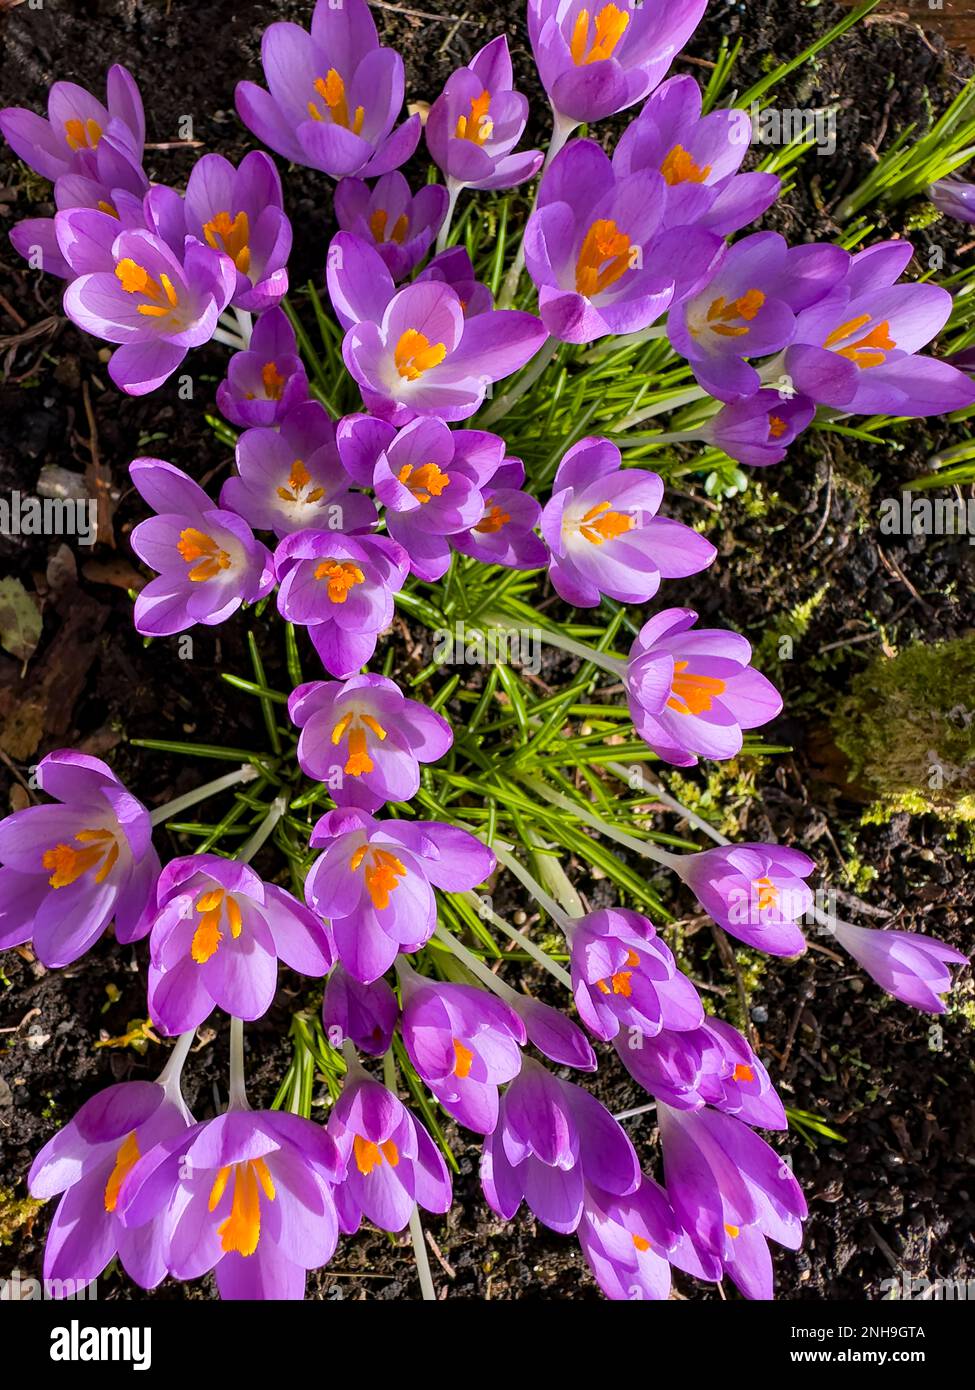 Early Crocus, Crocus Tommasinianus, flowering in garden setting Stock Photo